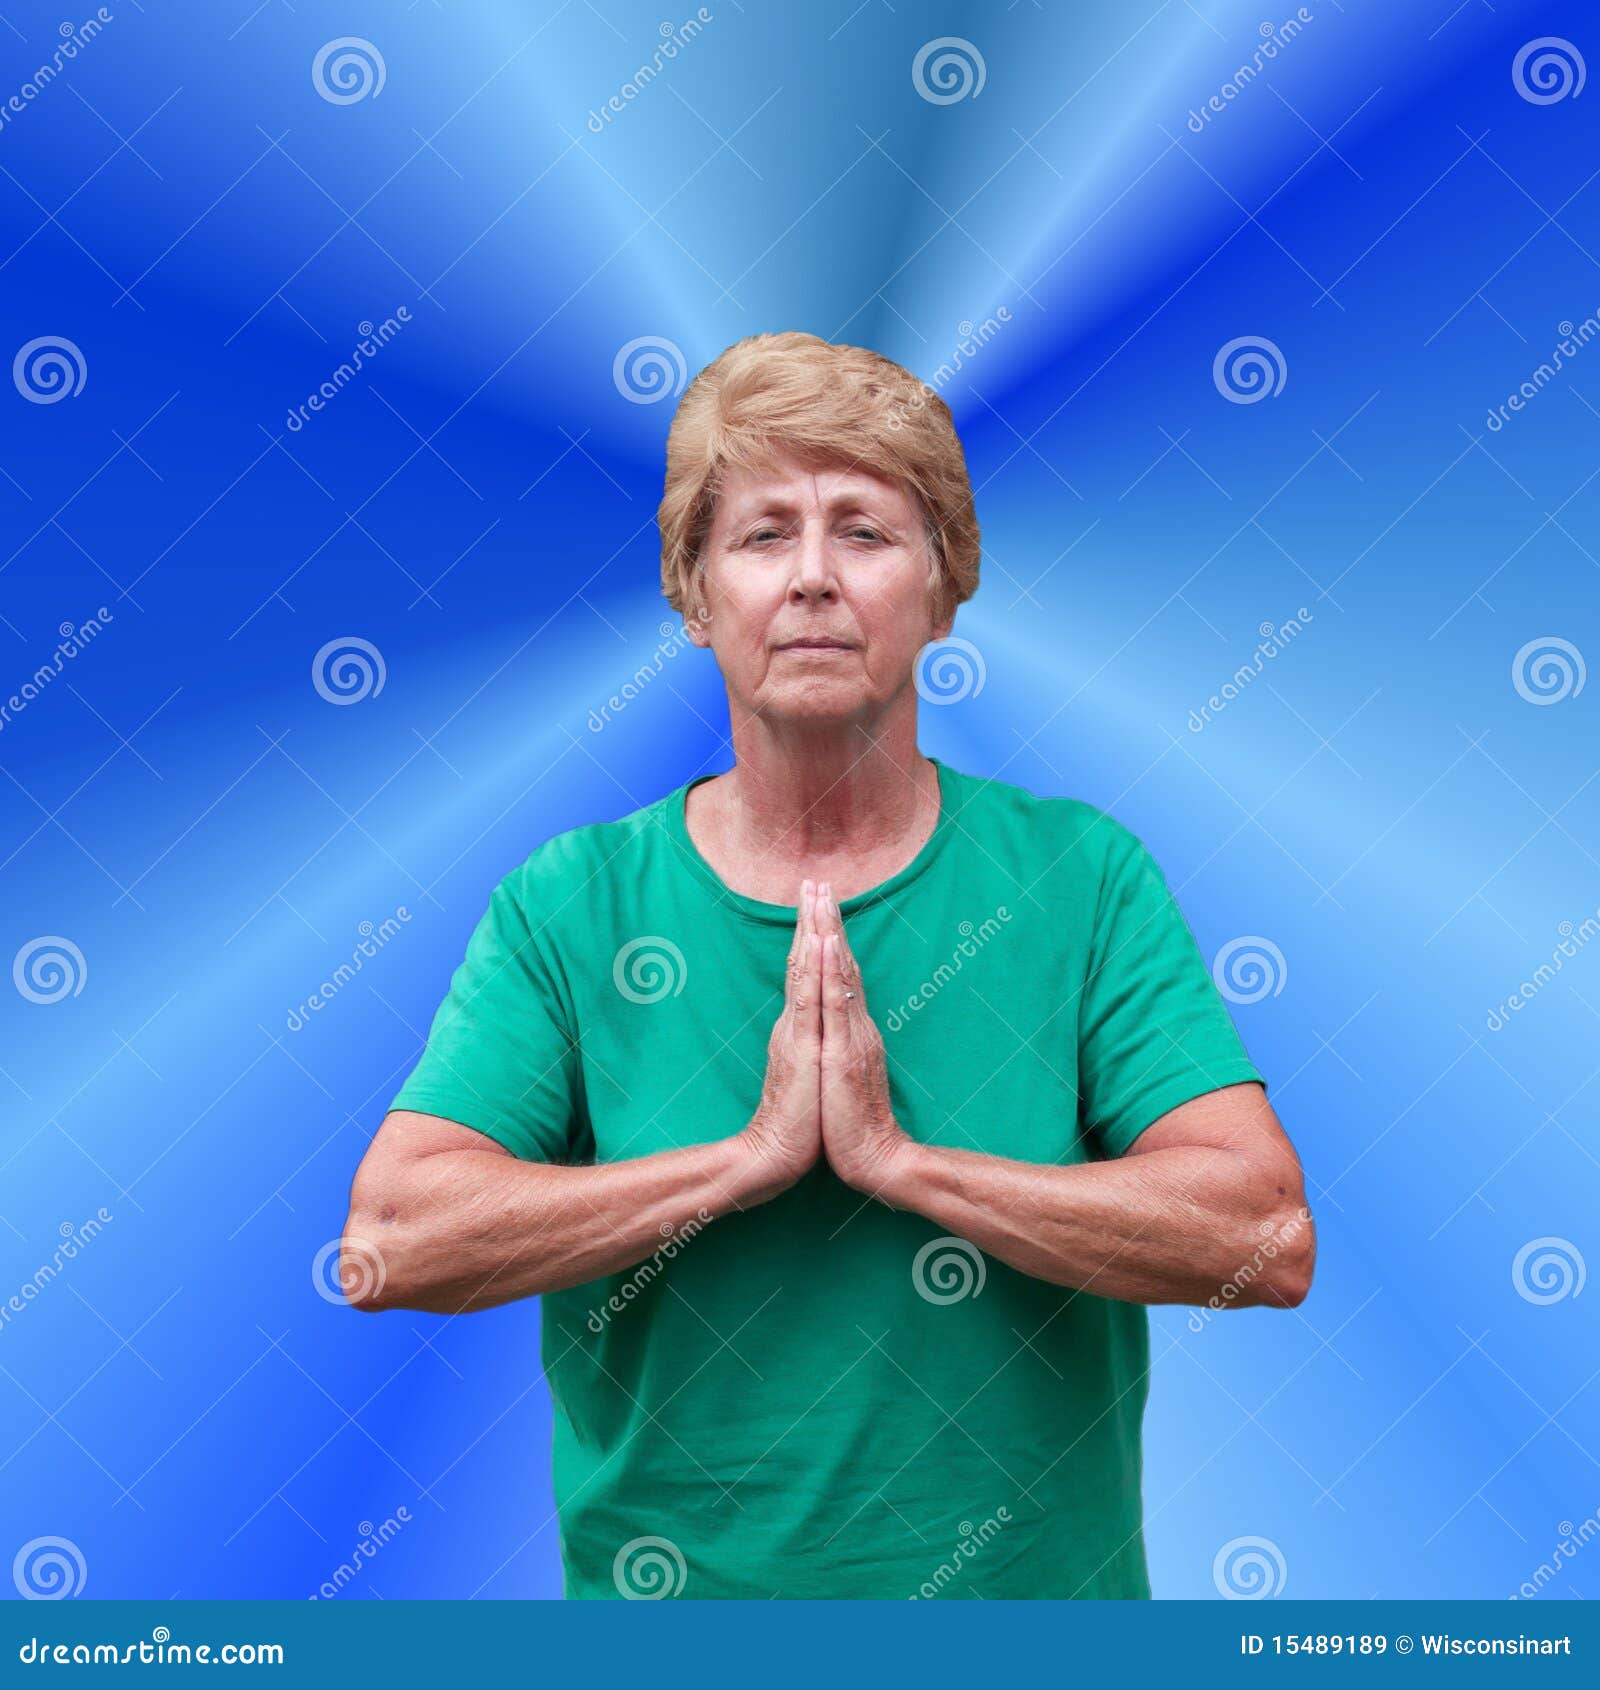 senior mature woman spiritual spirituality prayer